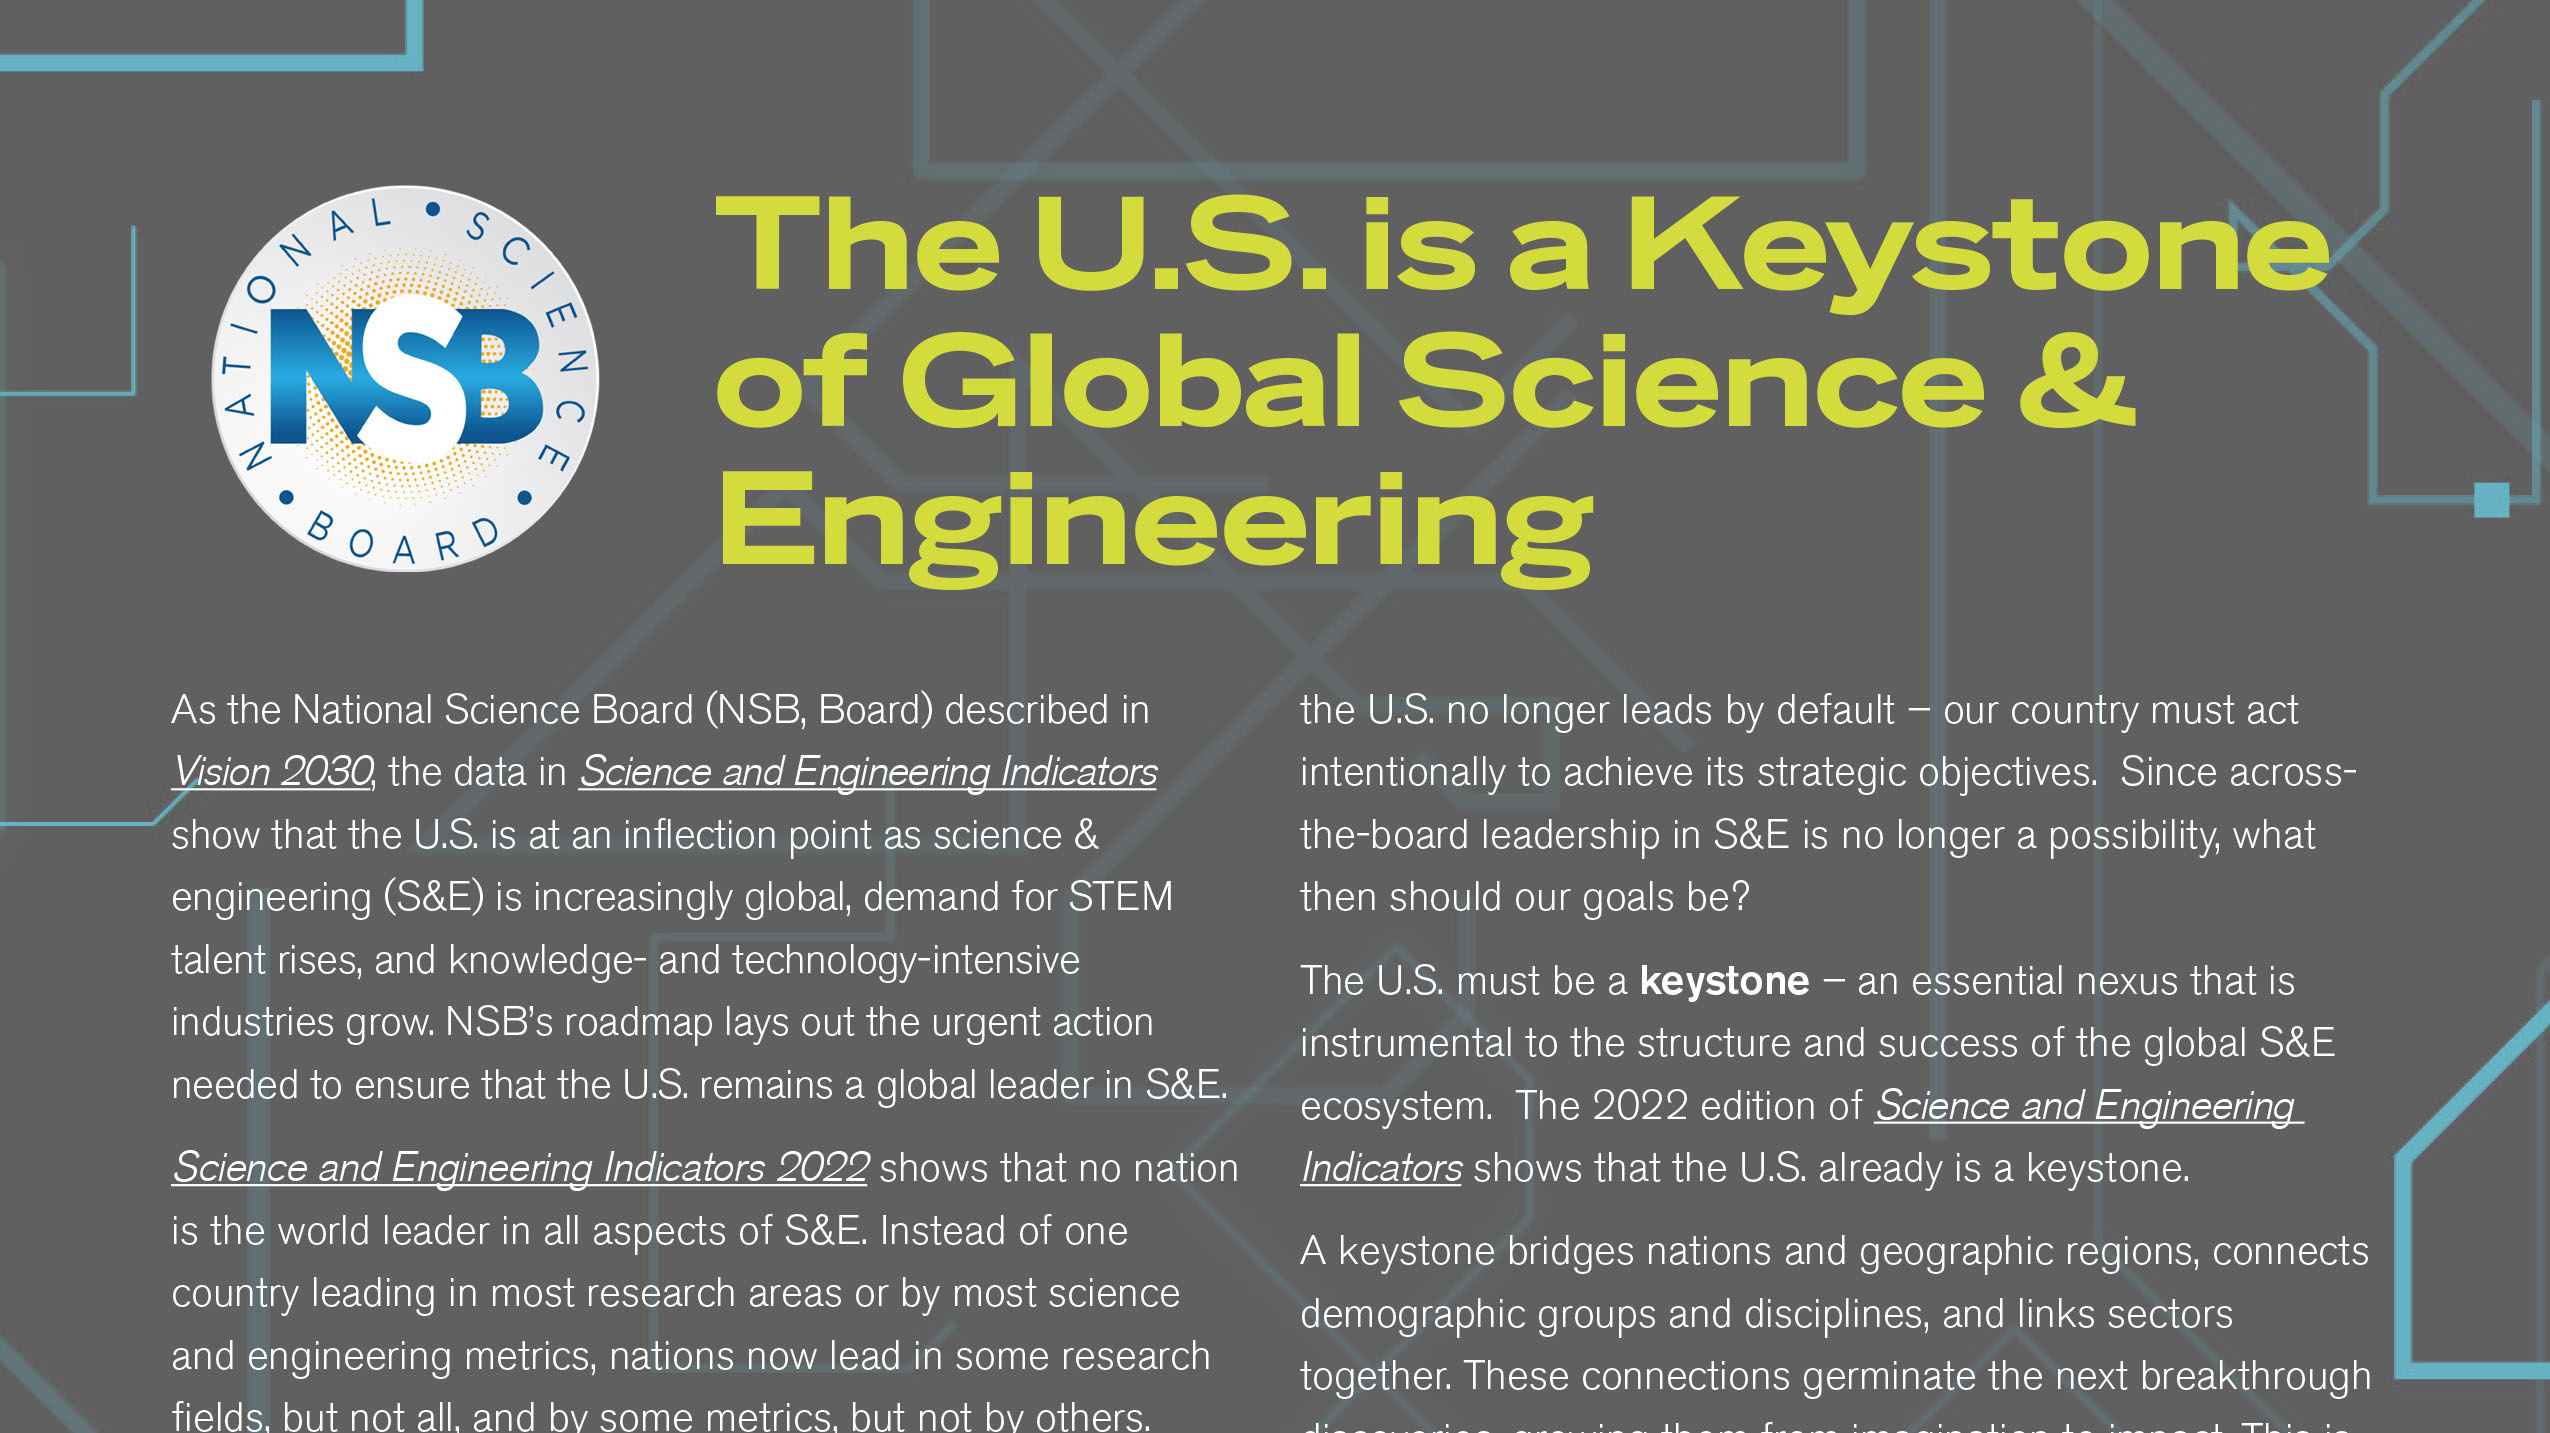 The U.S. is a Keystone of Global Science & Engineering